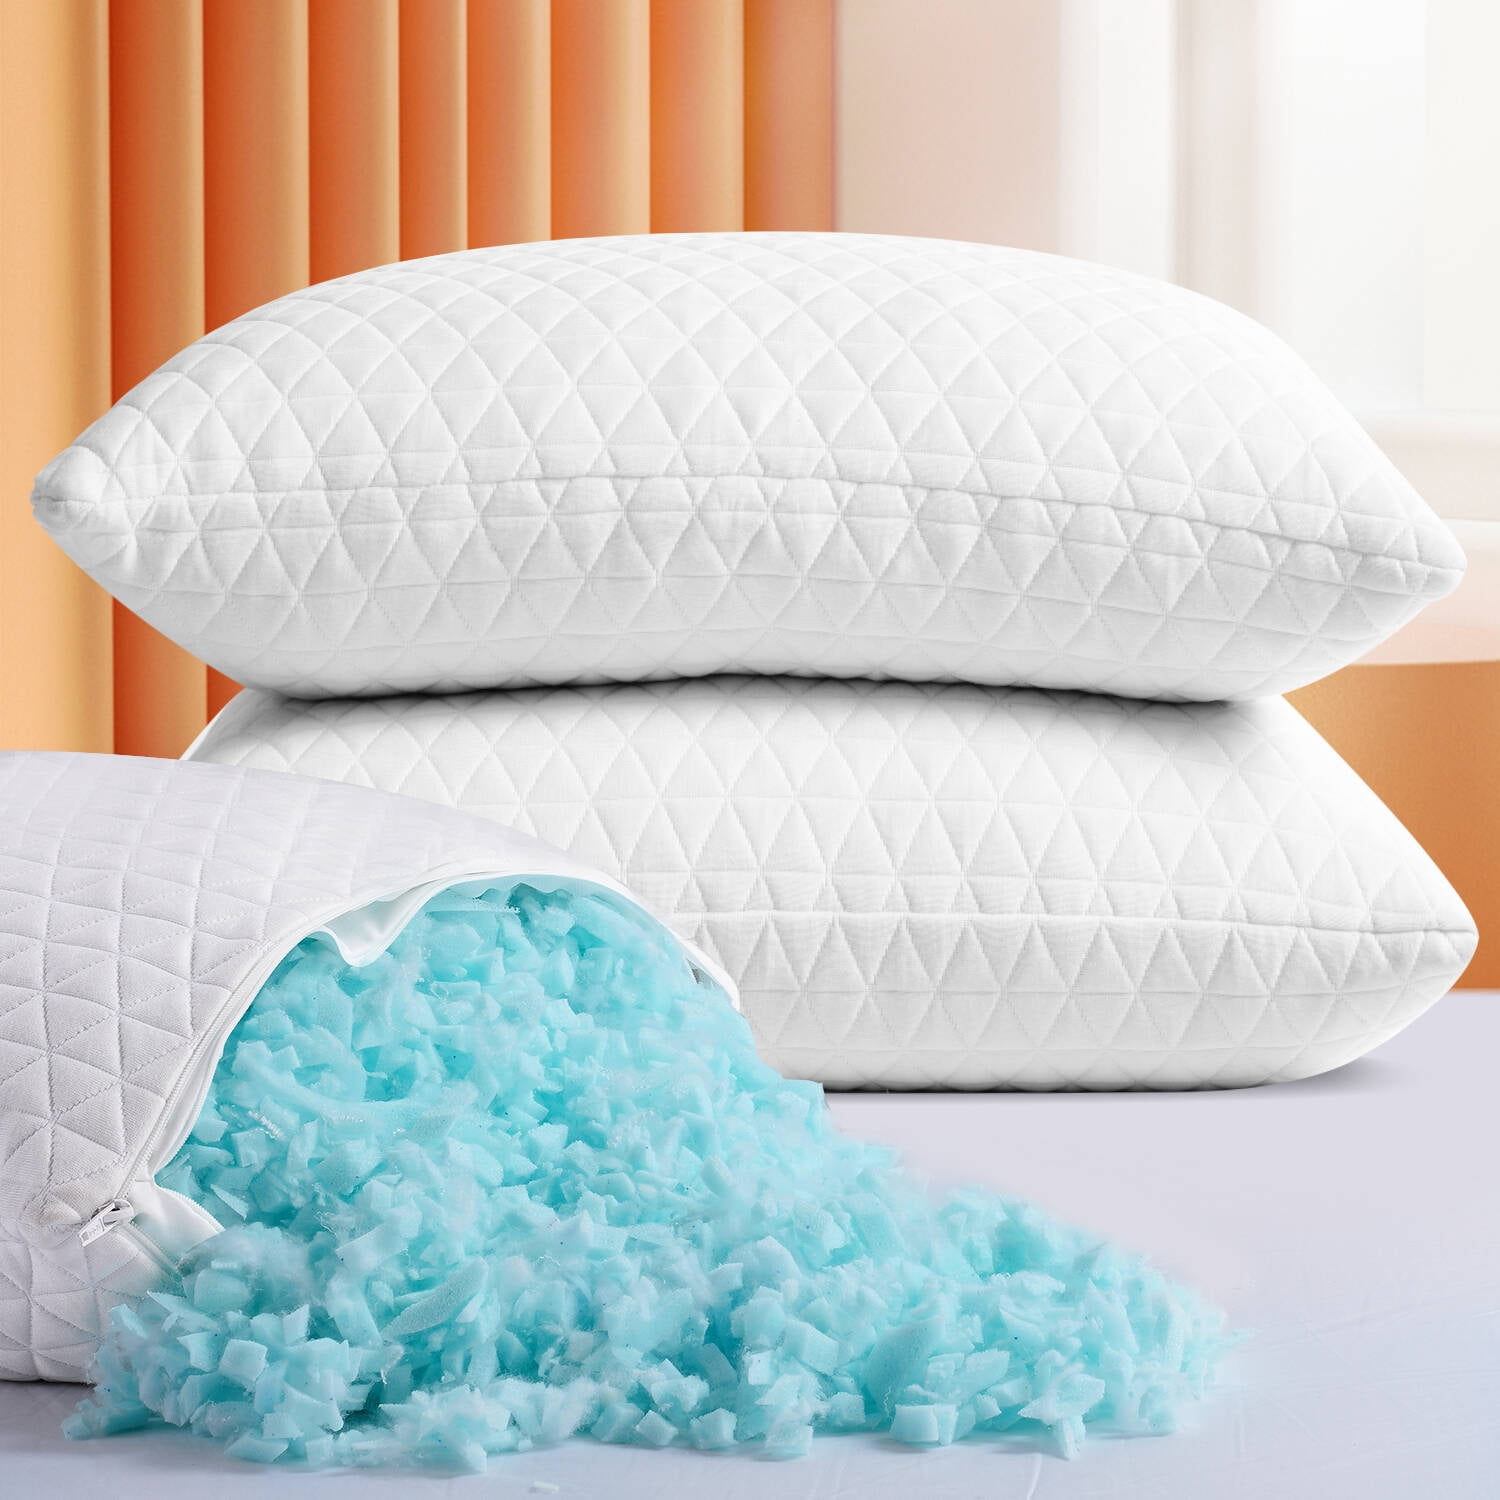 Should You Buy? Qutool Shredded Memory Foam Pillow 